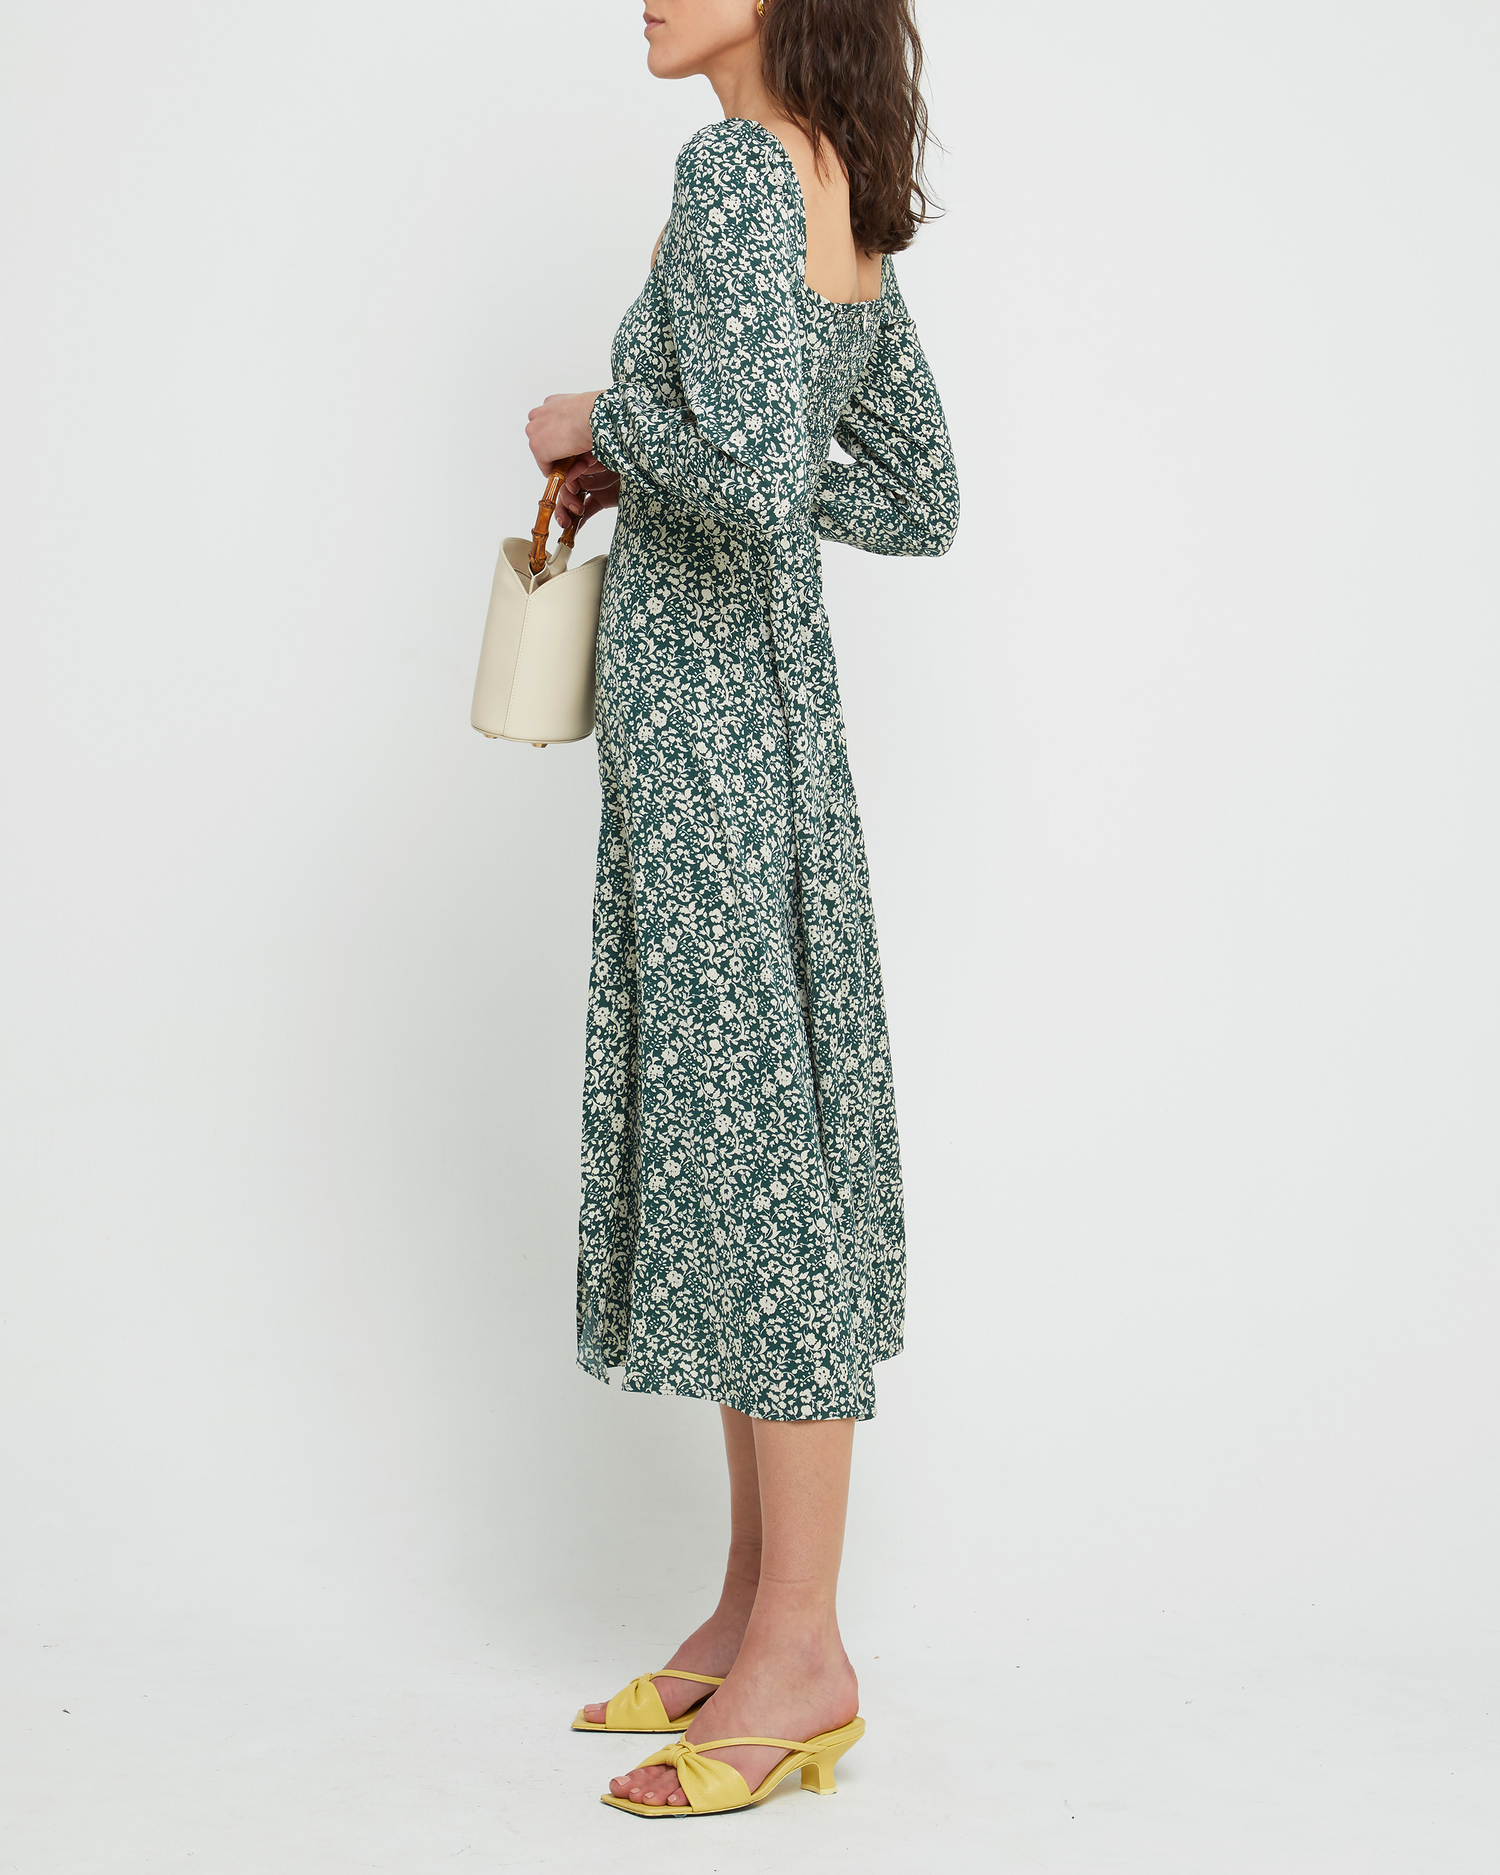 Fifth image of Lenon Dress, a green midi dress, side skirt slit, long sleeves, square neckline